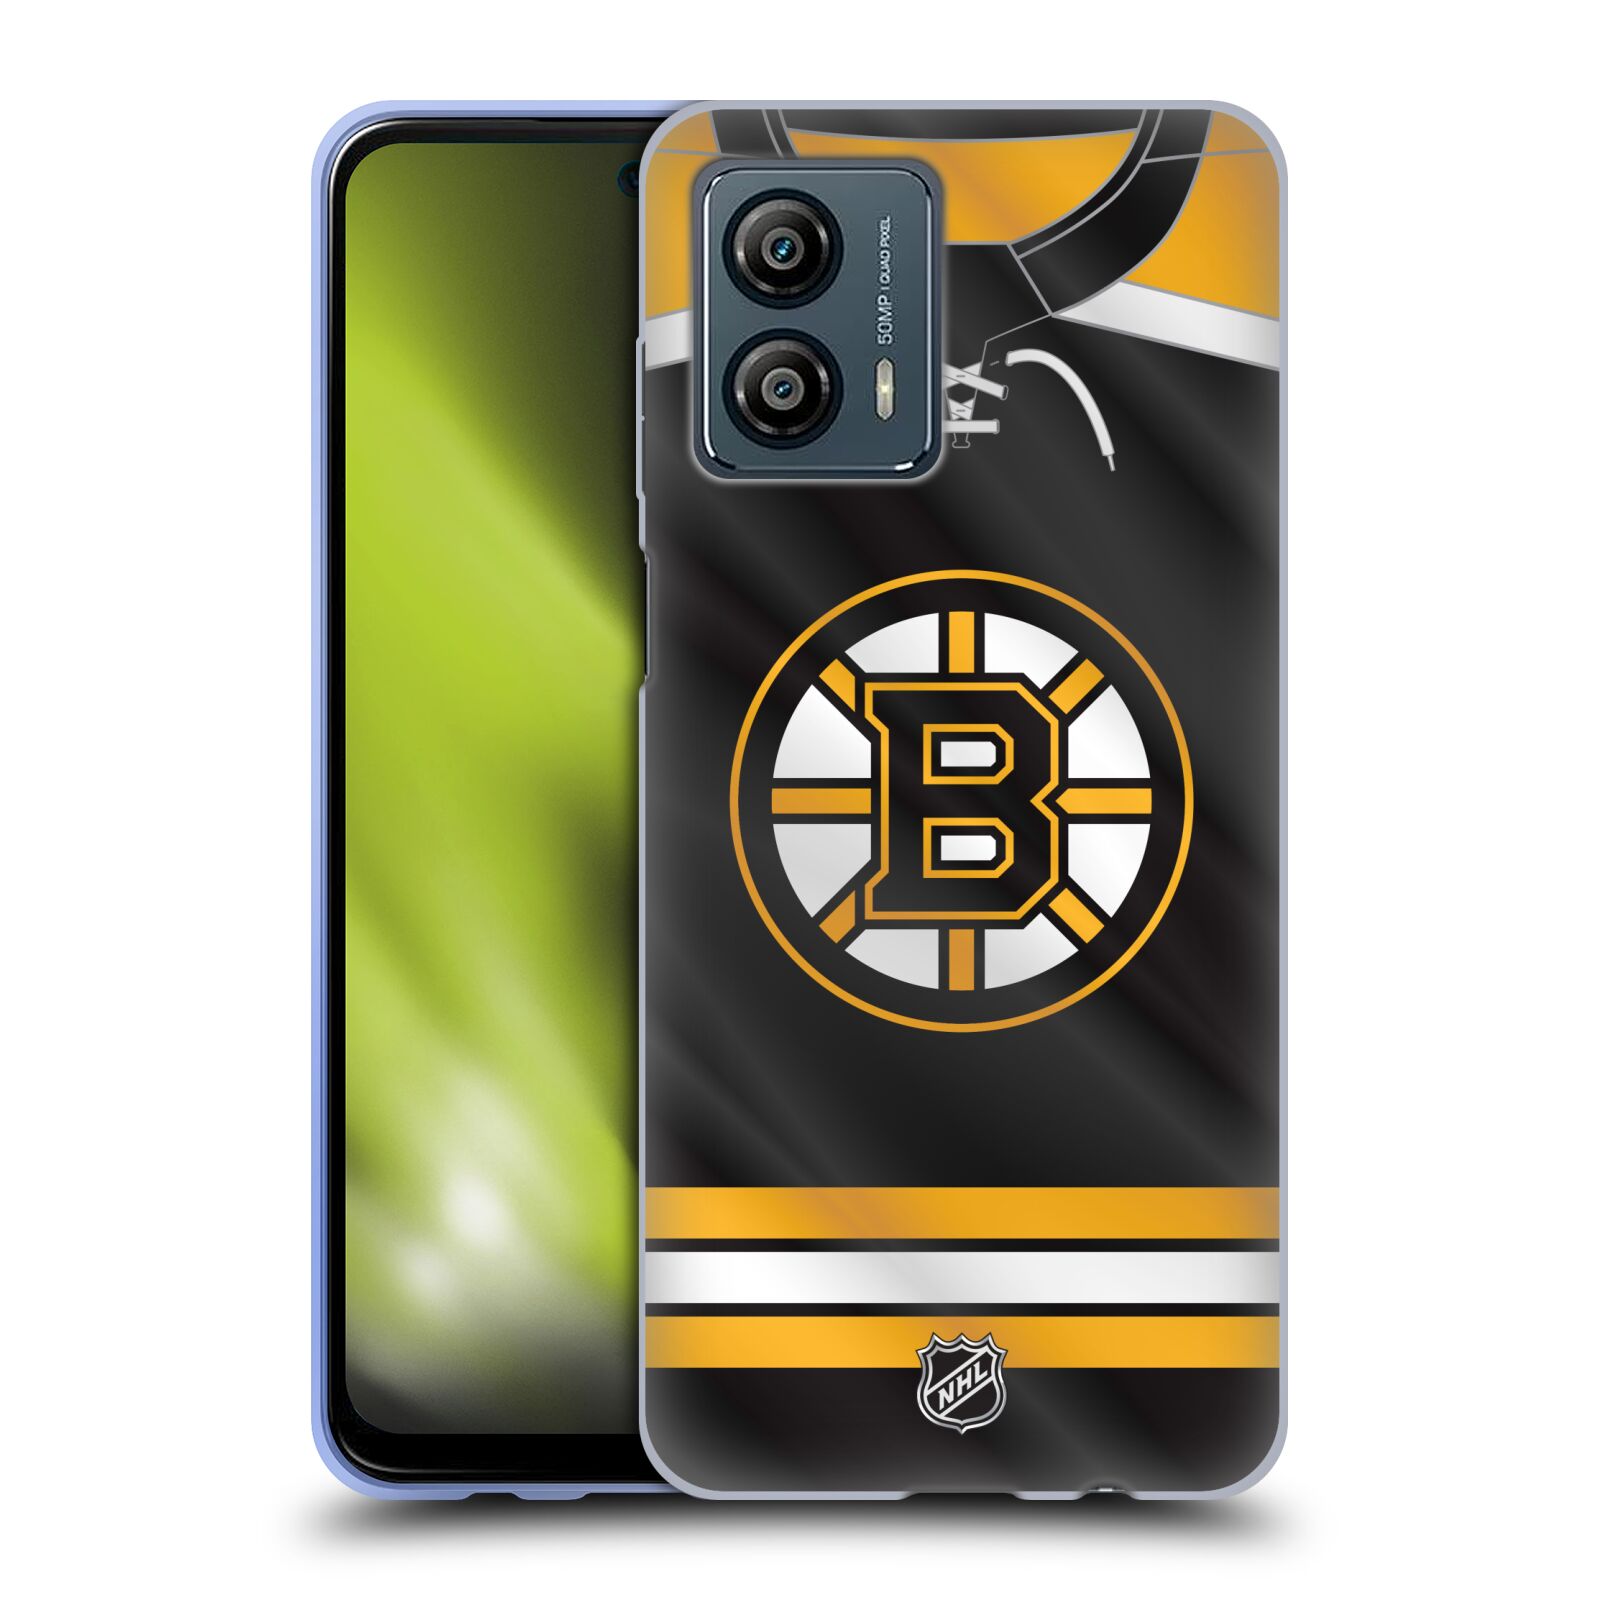 Silikonové pouzdro na mobil Motorola Moto G53 5G - NHL - Dres Boston Bruins (Silikonový kryt, obal, pouzdro na mobilní telefon Motorola Moto G53 5G s licencovaným motivem NHL - Dres Boston Bruins)